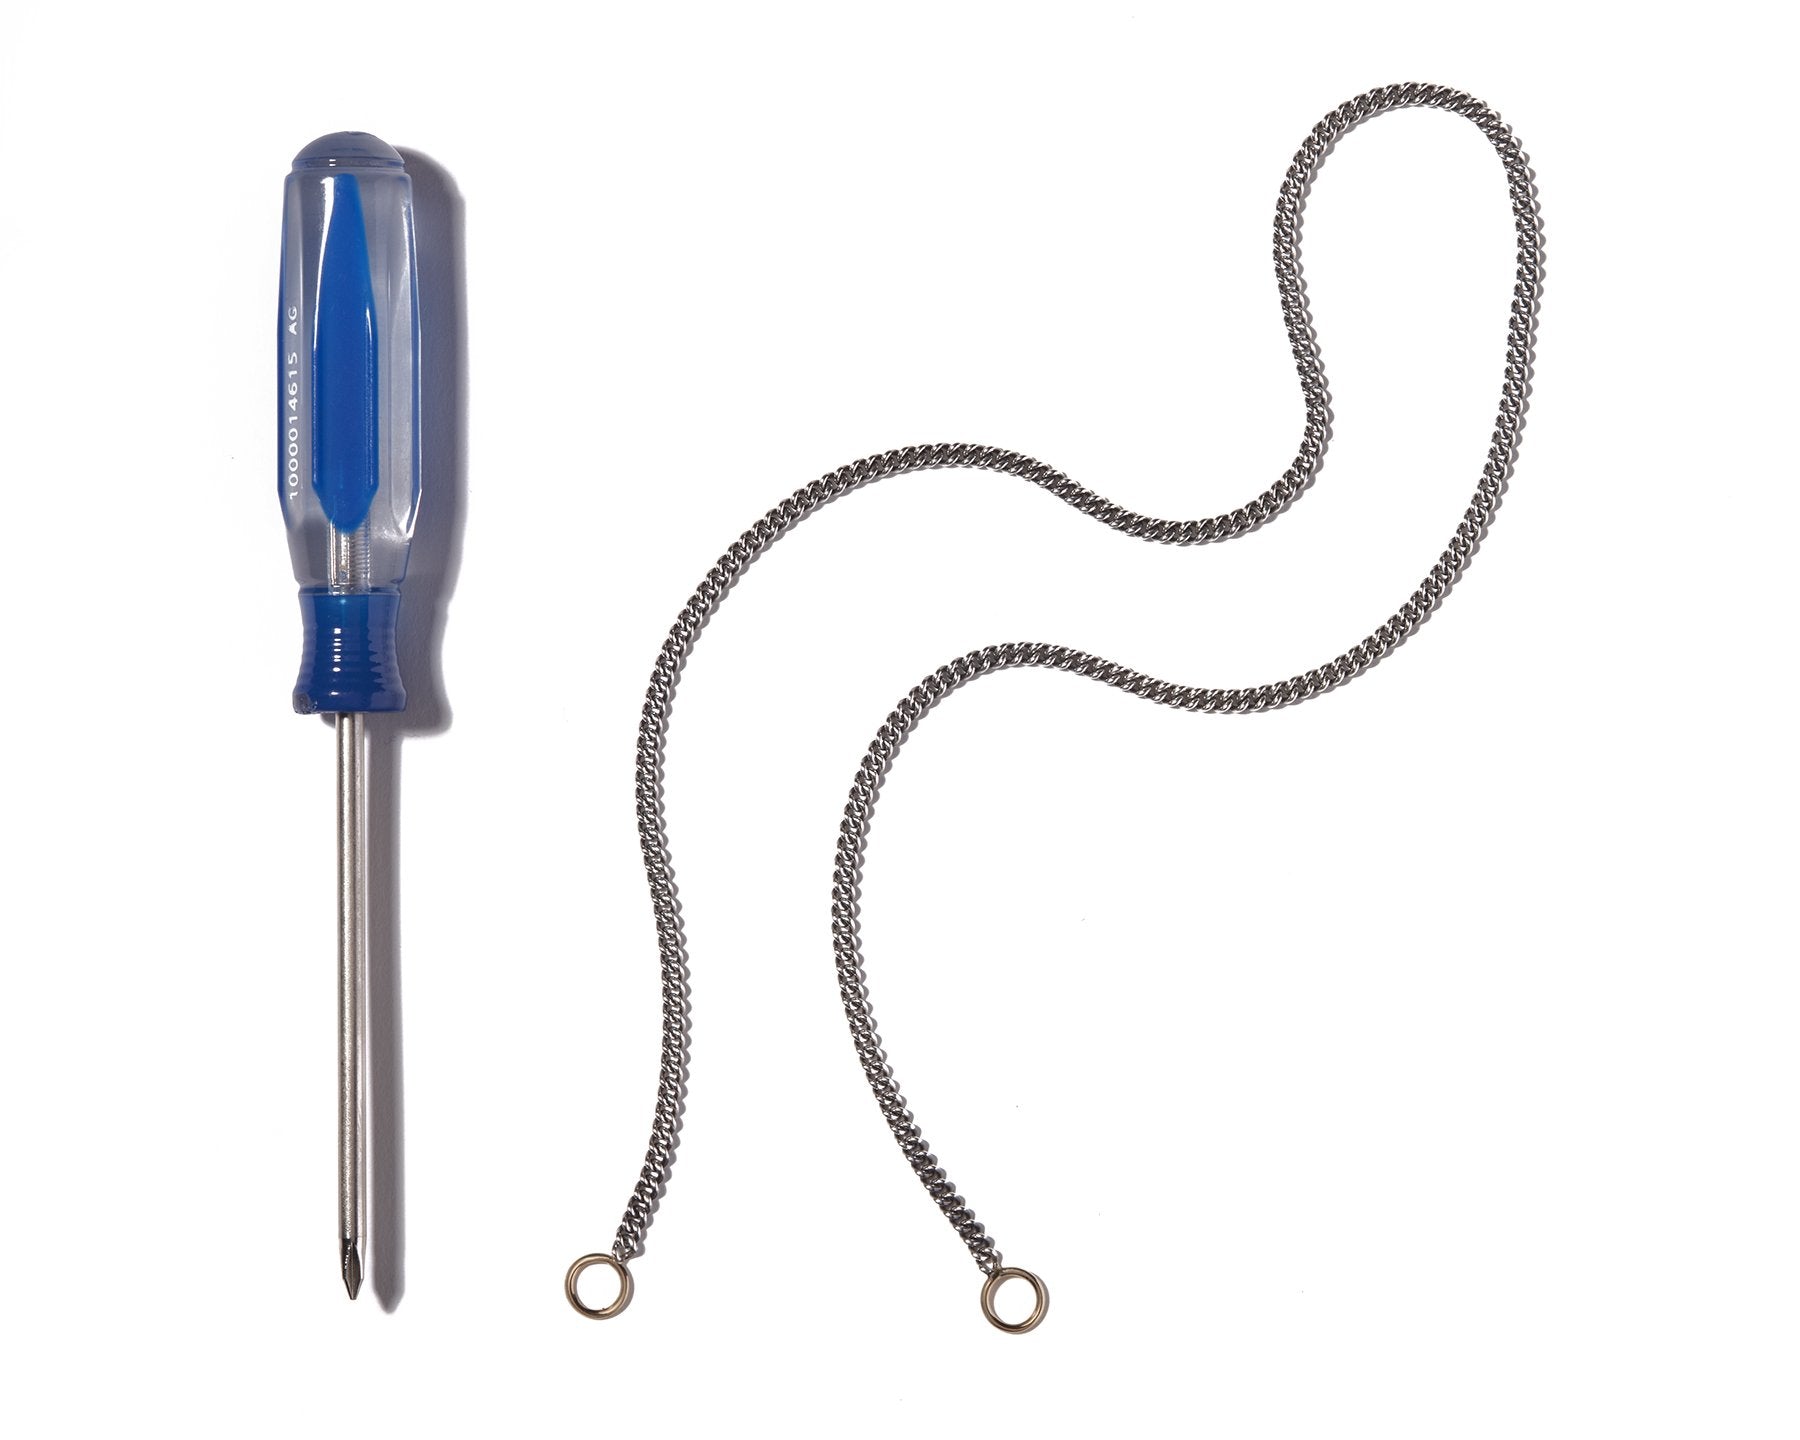 Curb chain bracelet alongside blue screwdriver